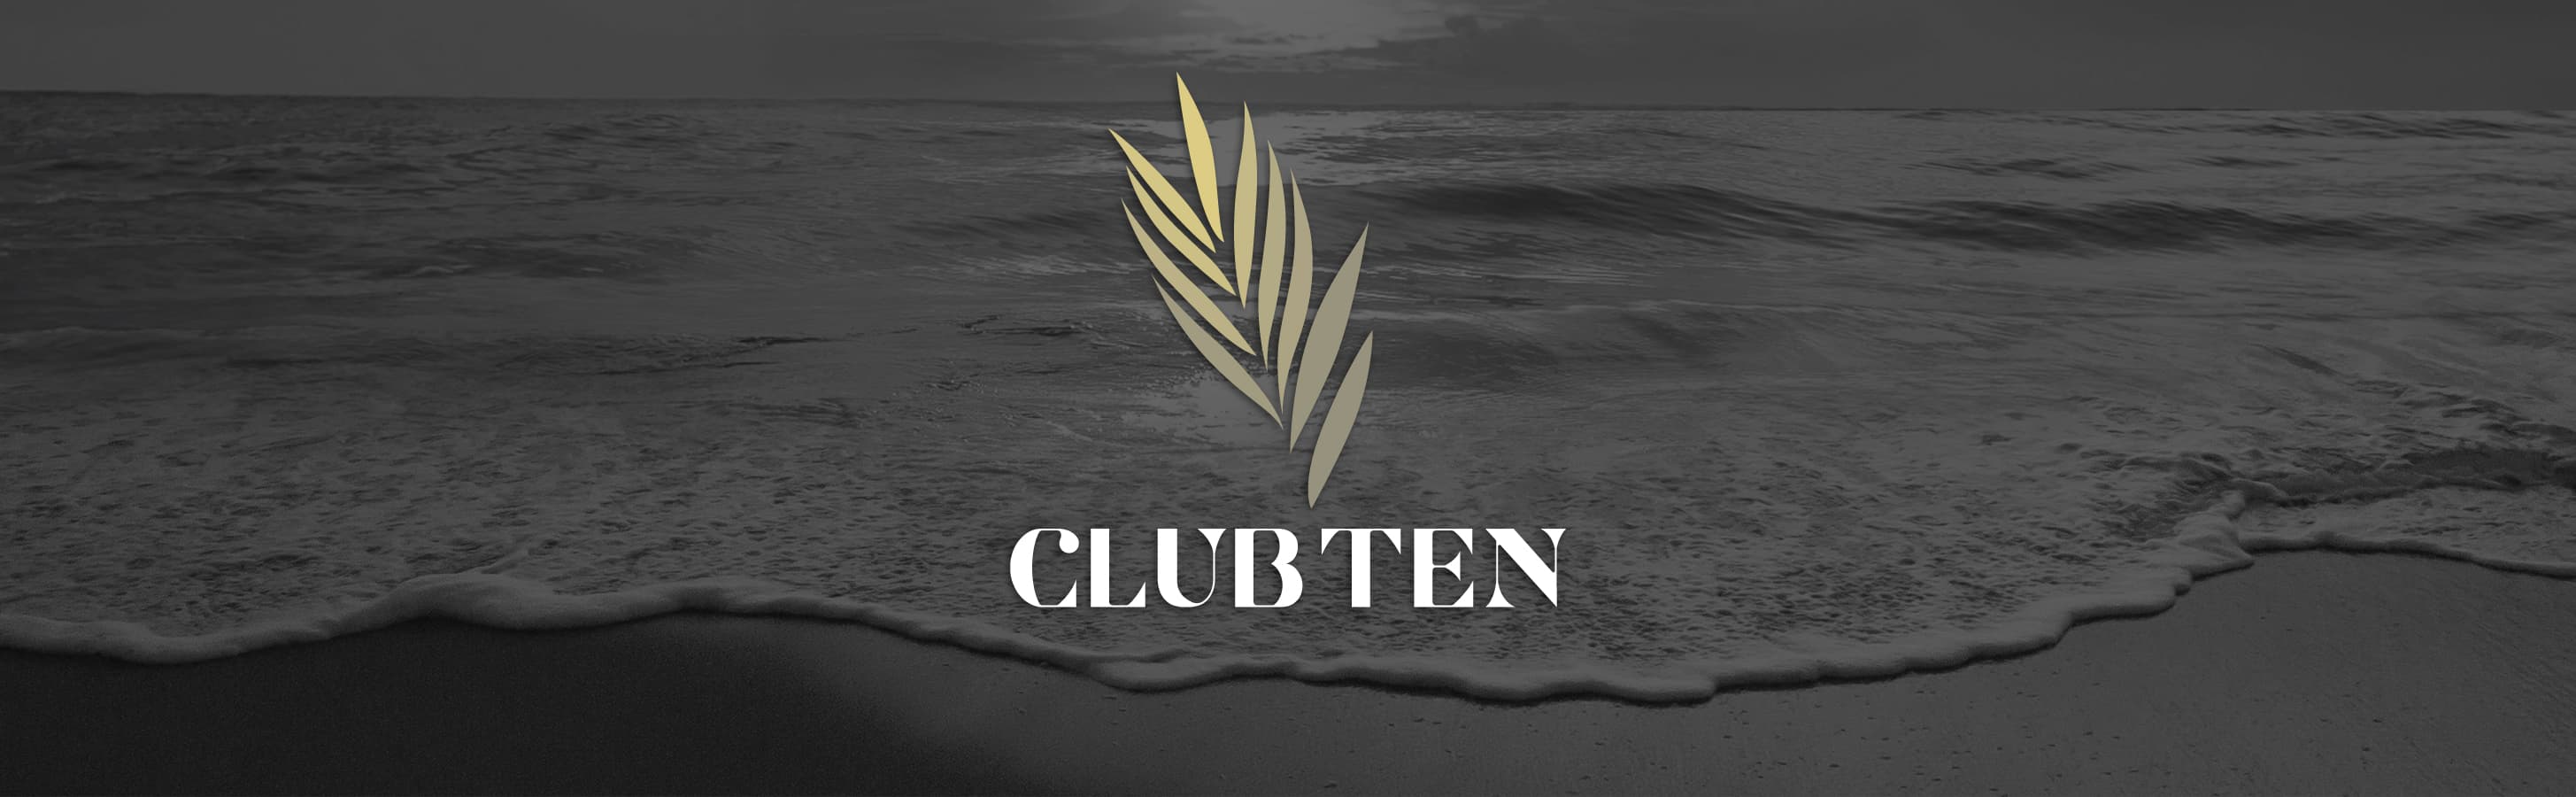 Banner photo of club ten logo on black and white beach